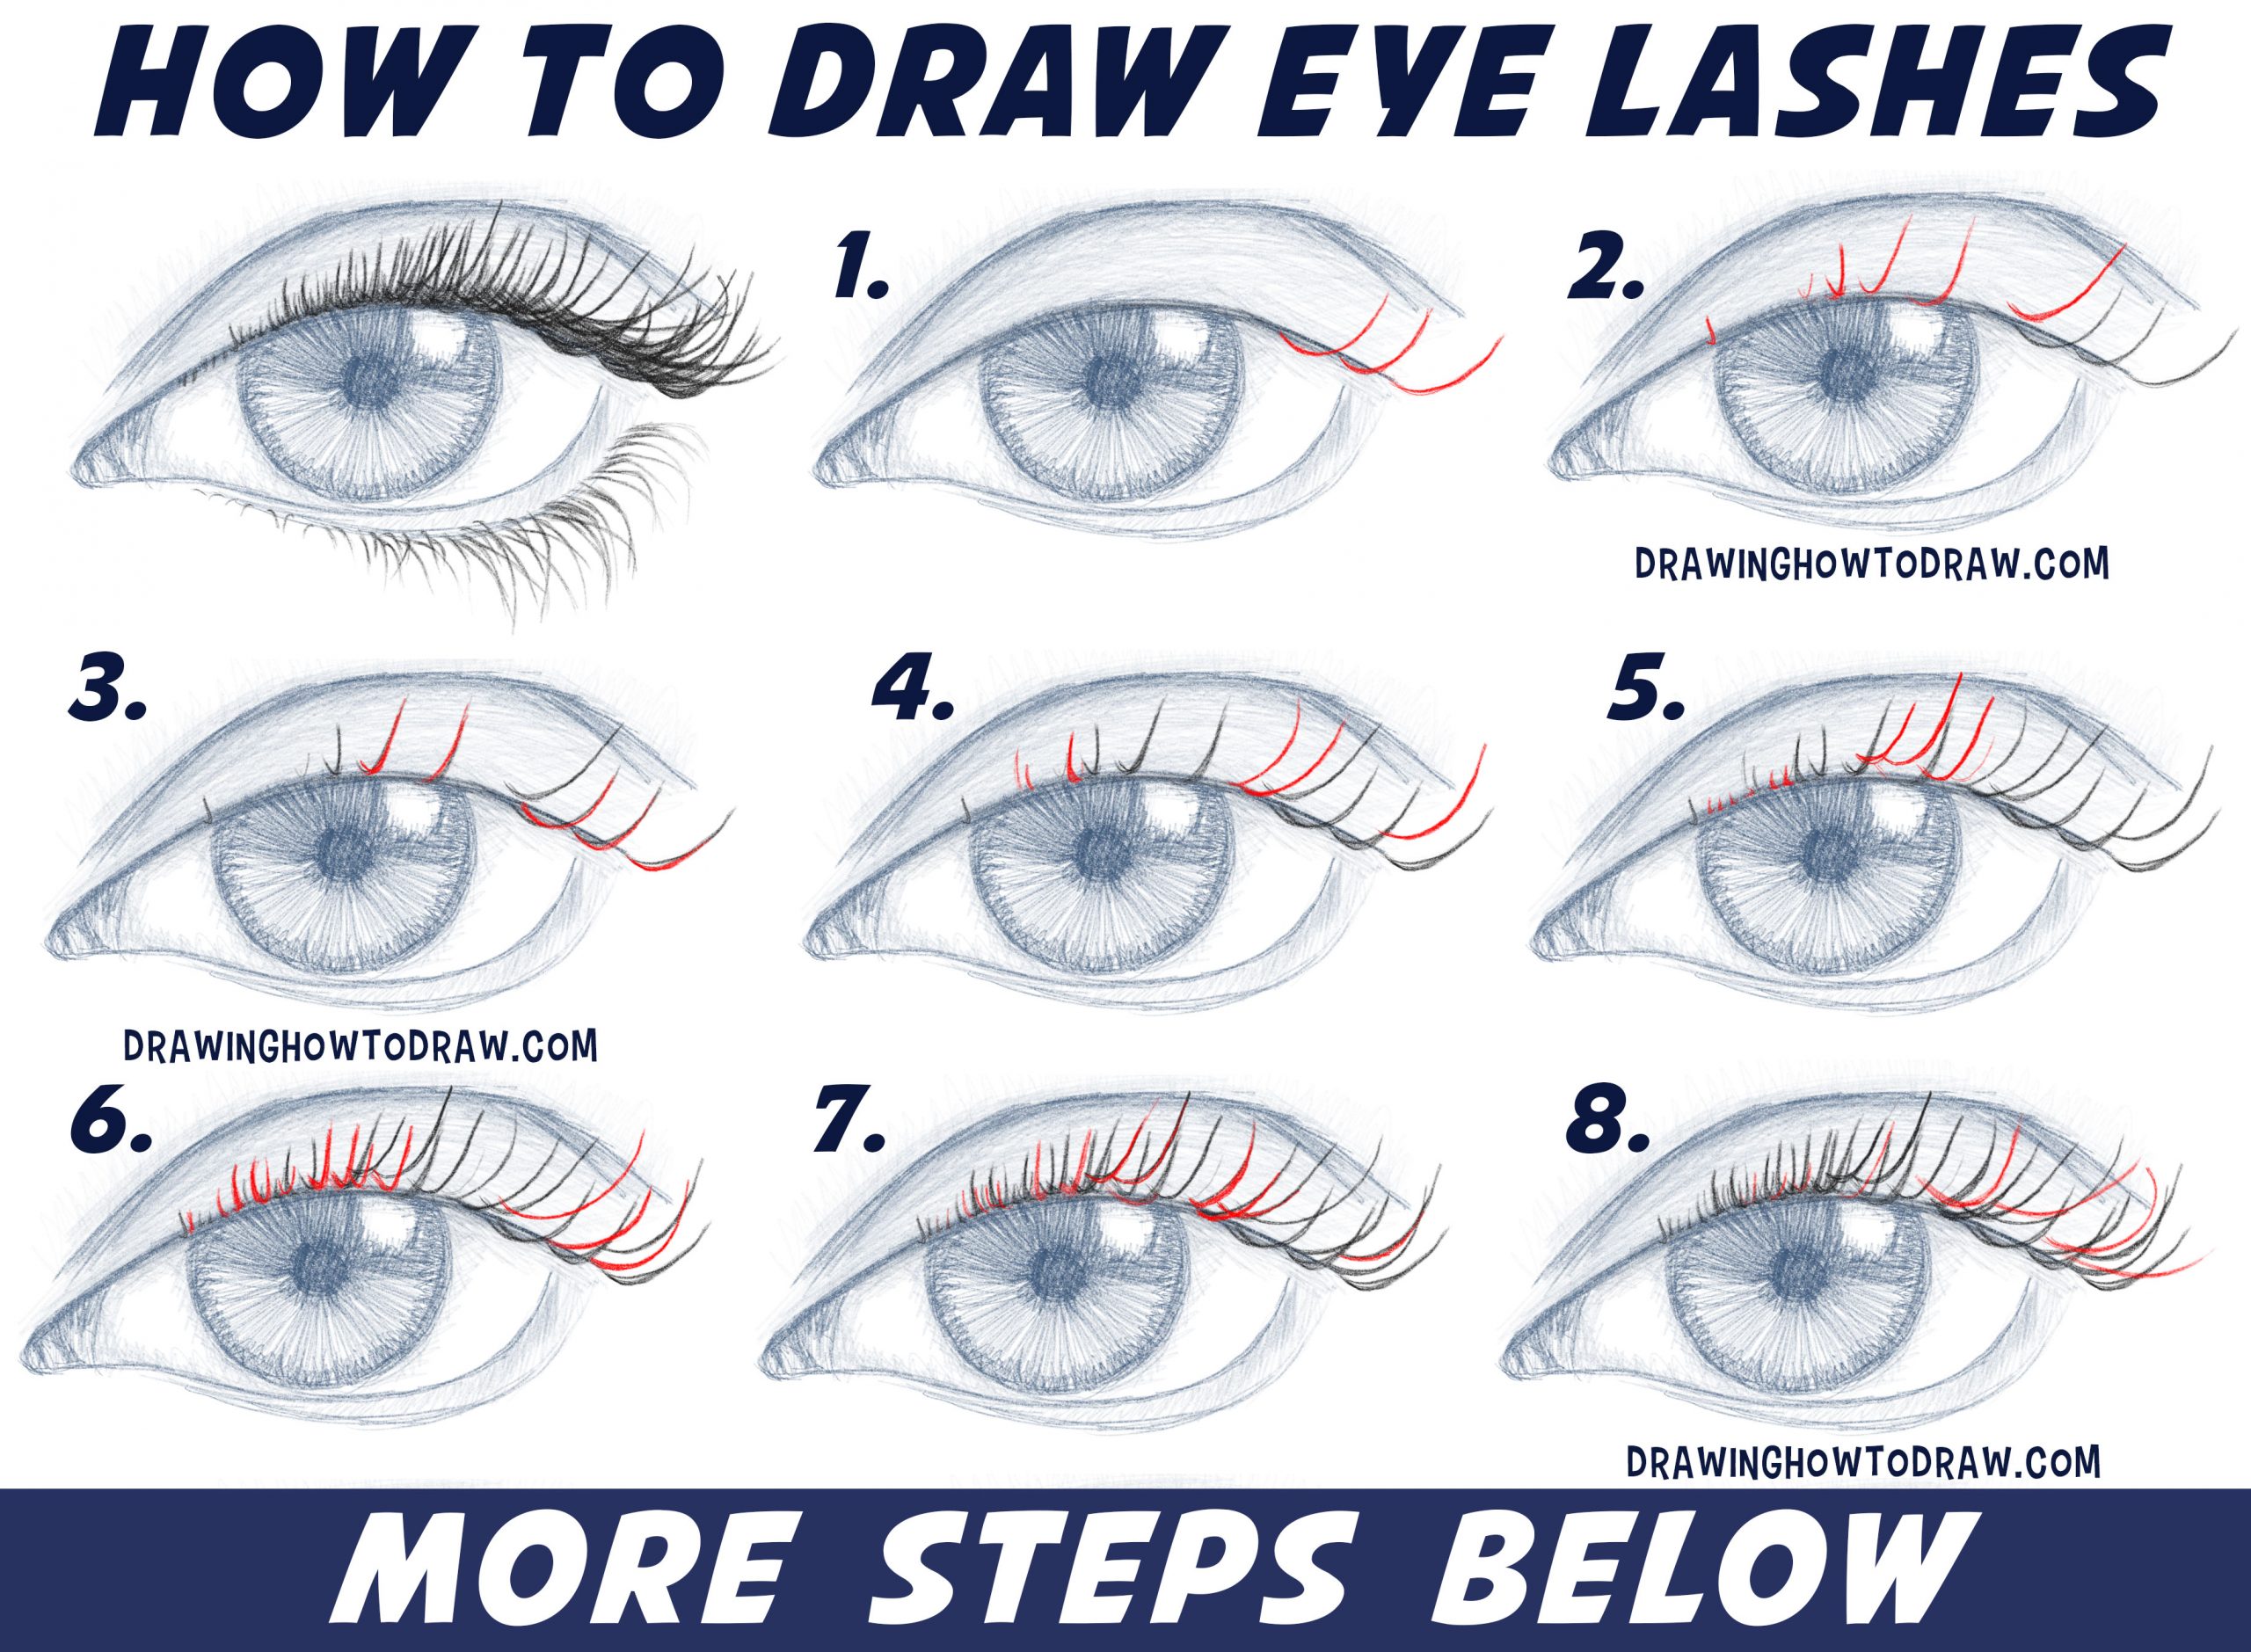 How To Draw Eyelashes: 11 Steps - Pedalaman